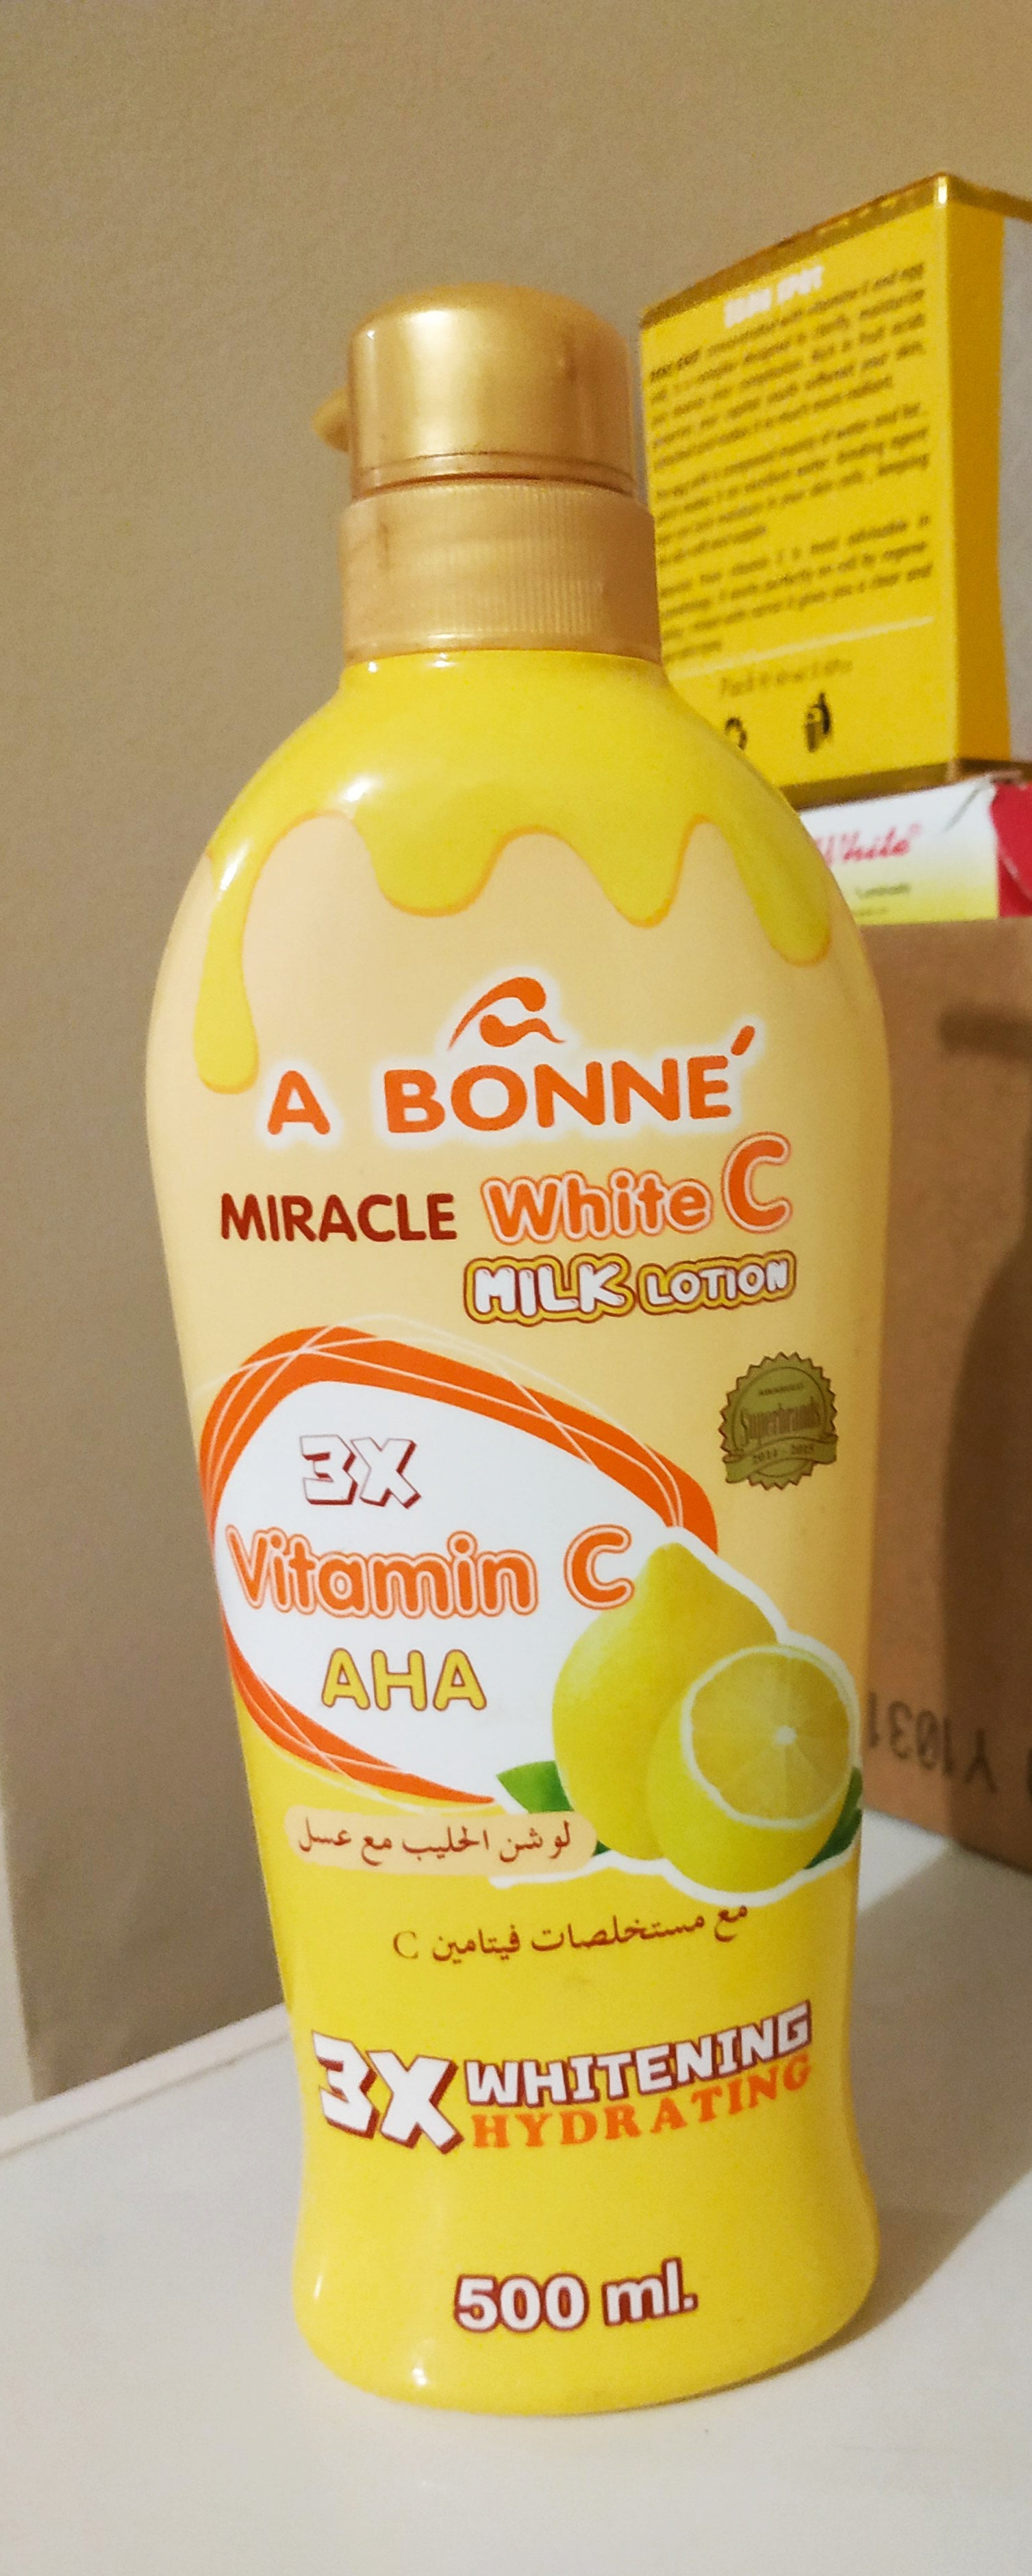 A Bonne Miracle white C milk lotion 3X vitamin c AHA 500ml